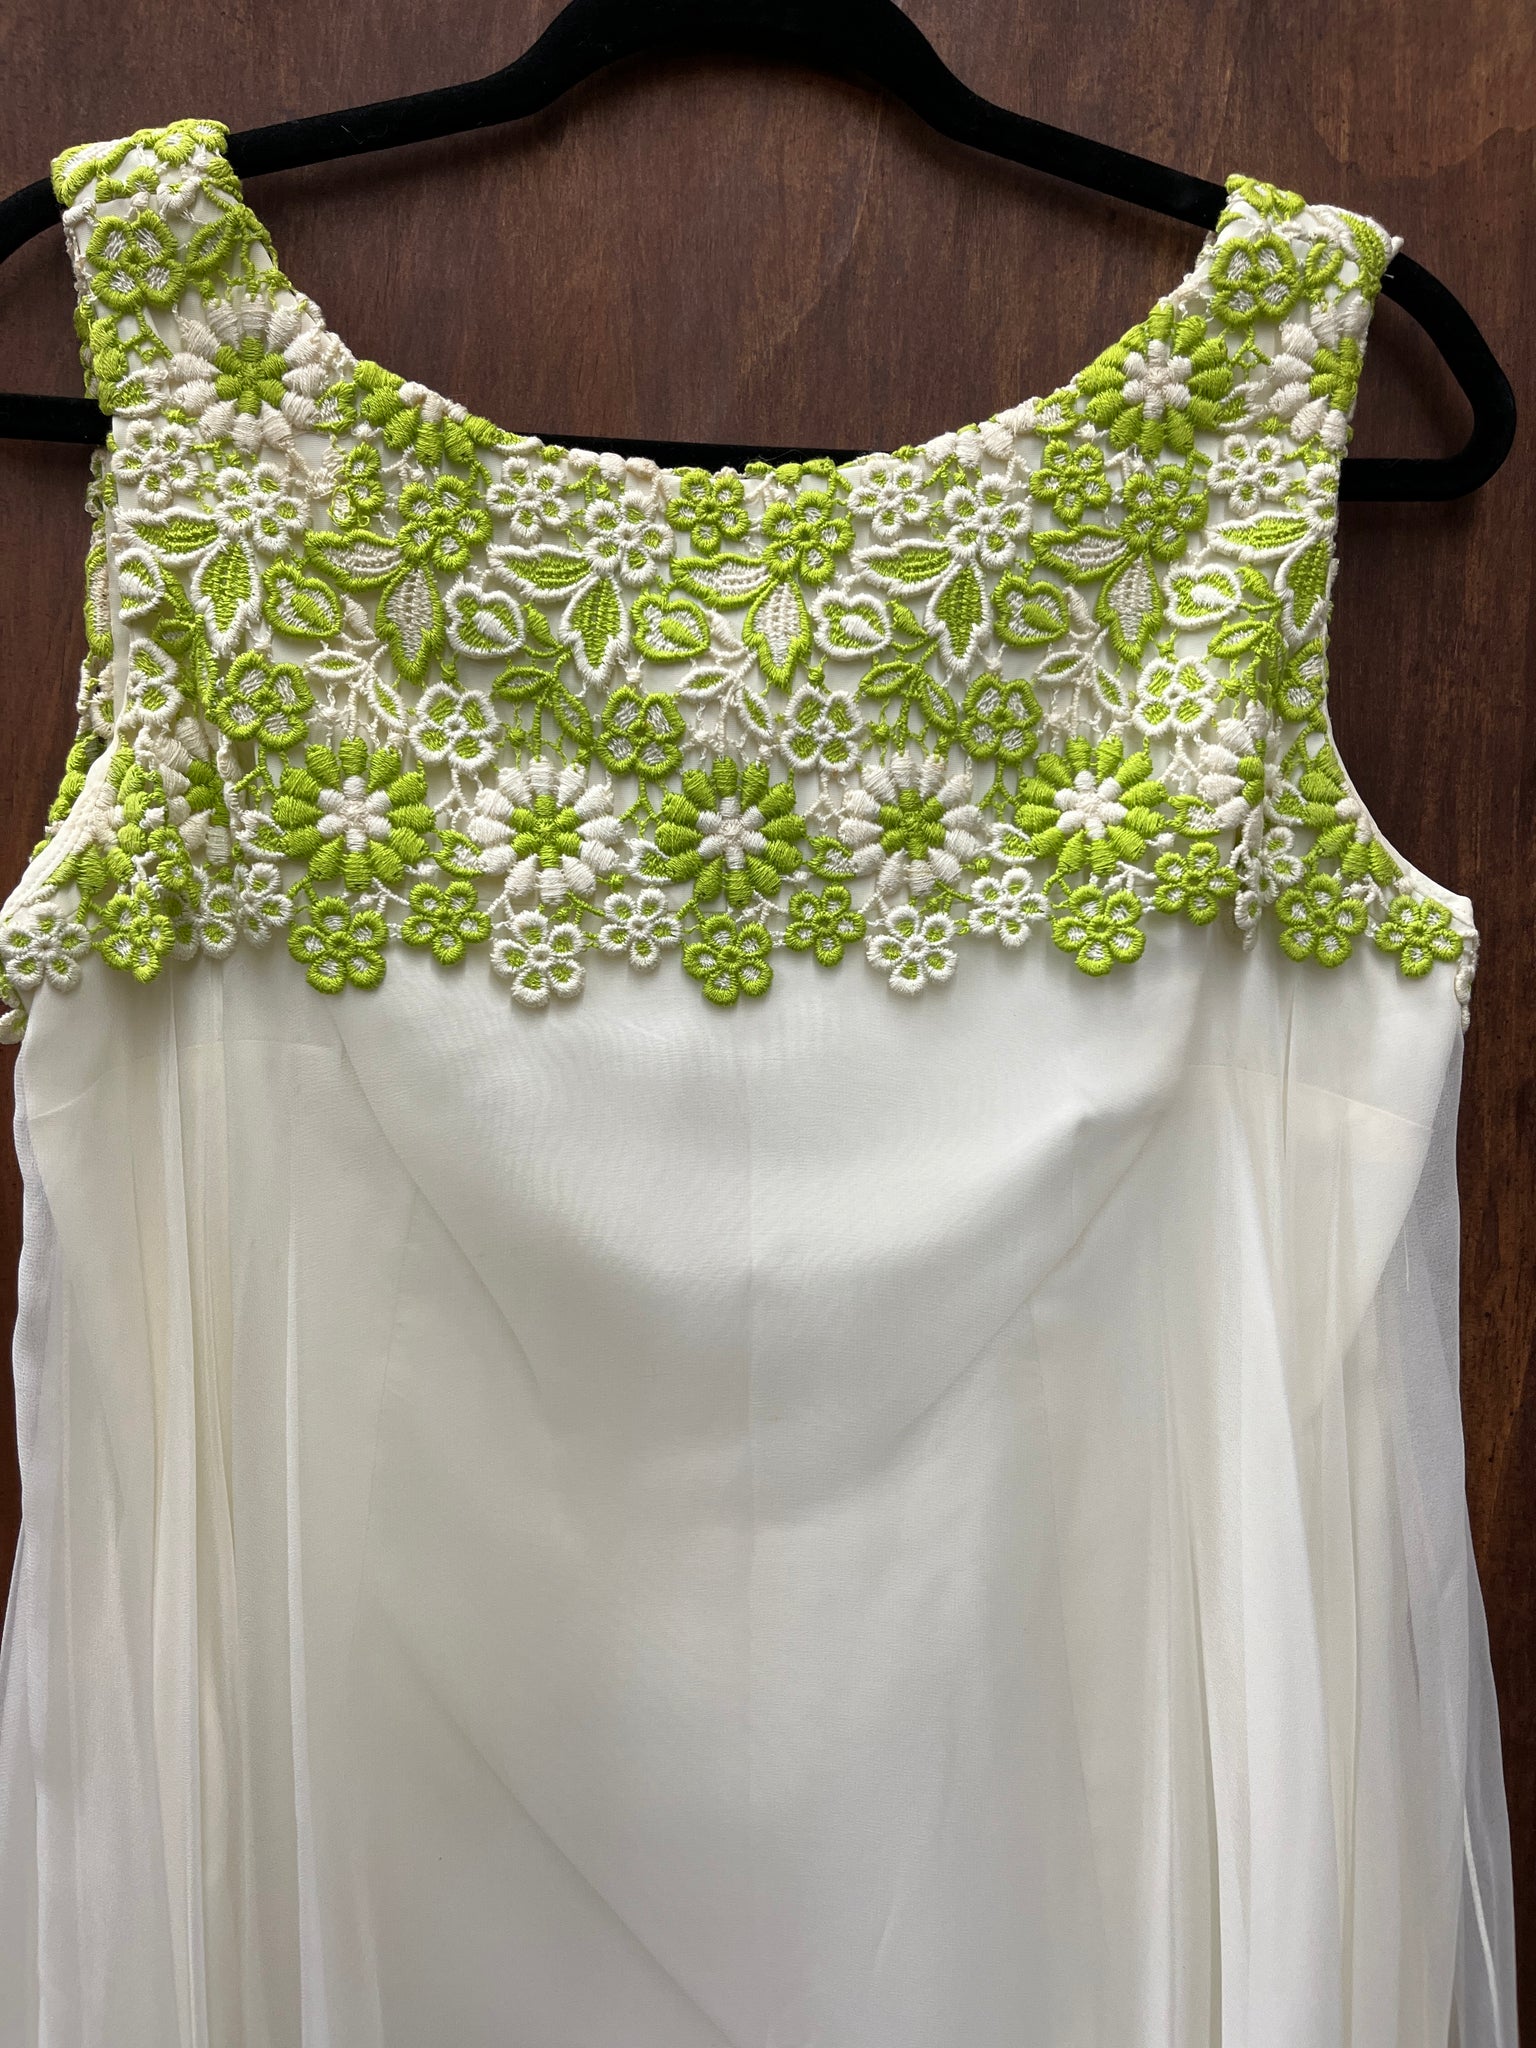 1960S DRESS- cream chiffon dress w/ green embroidered detail